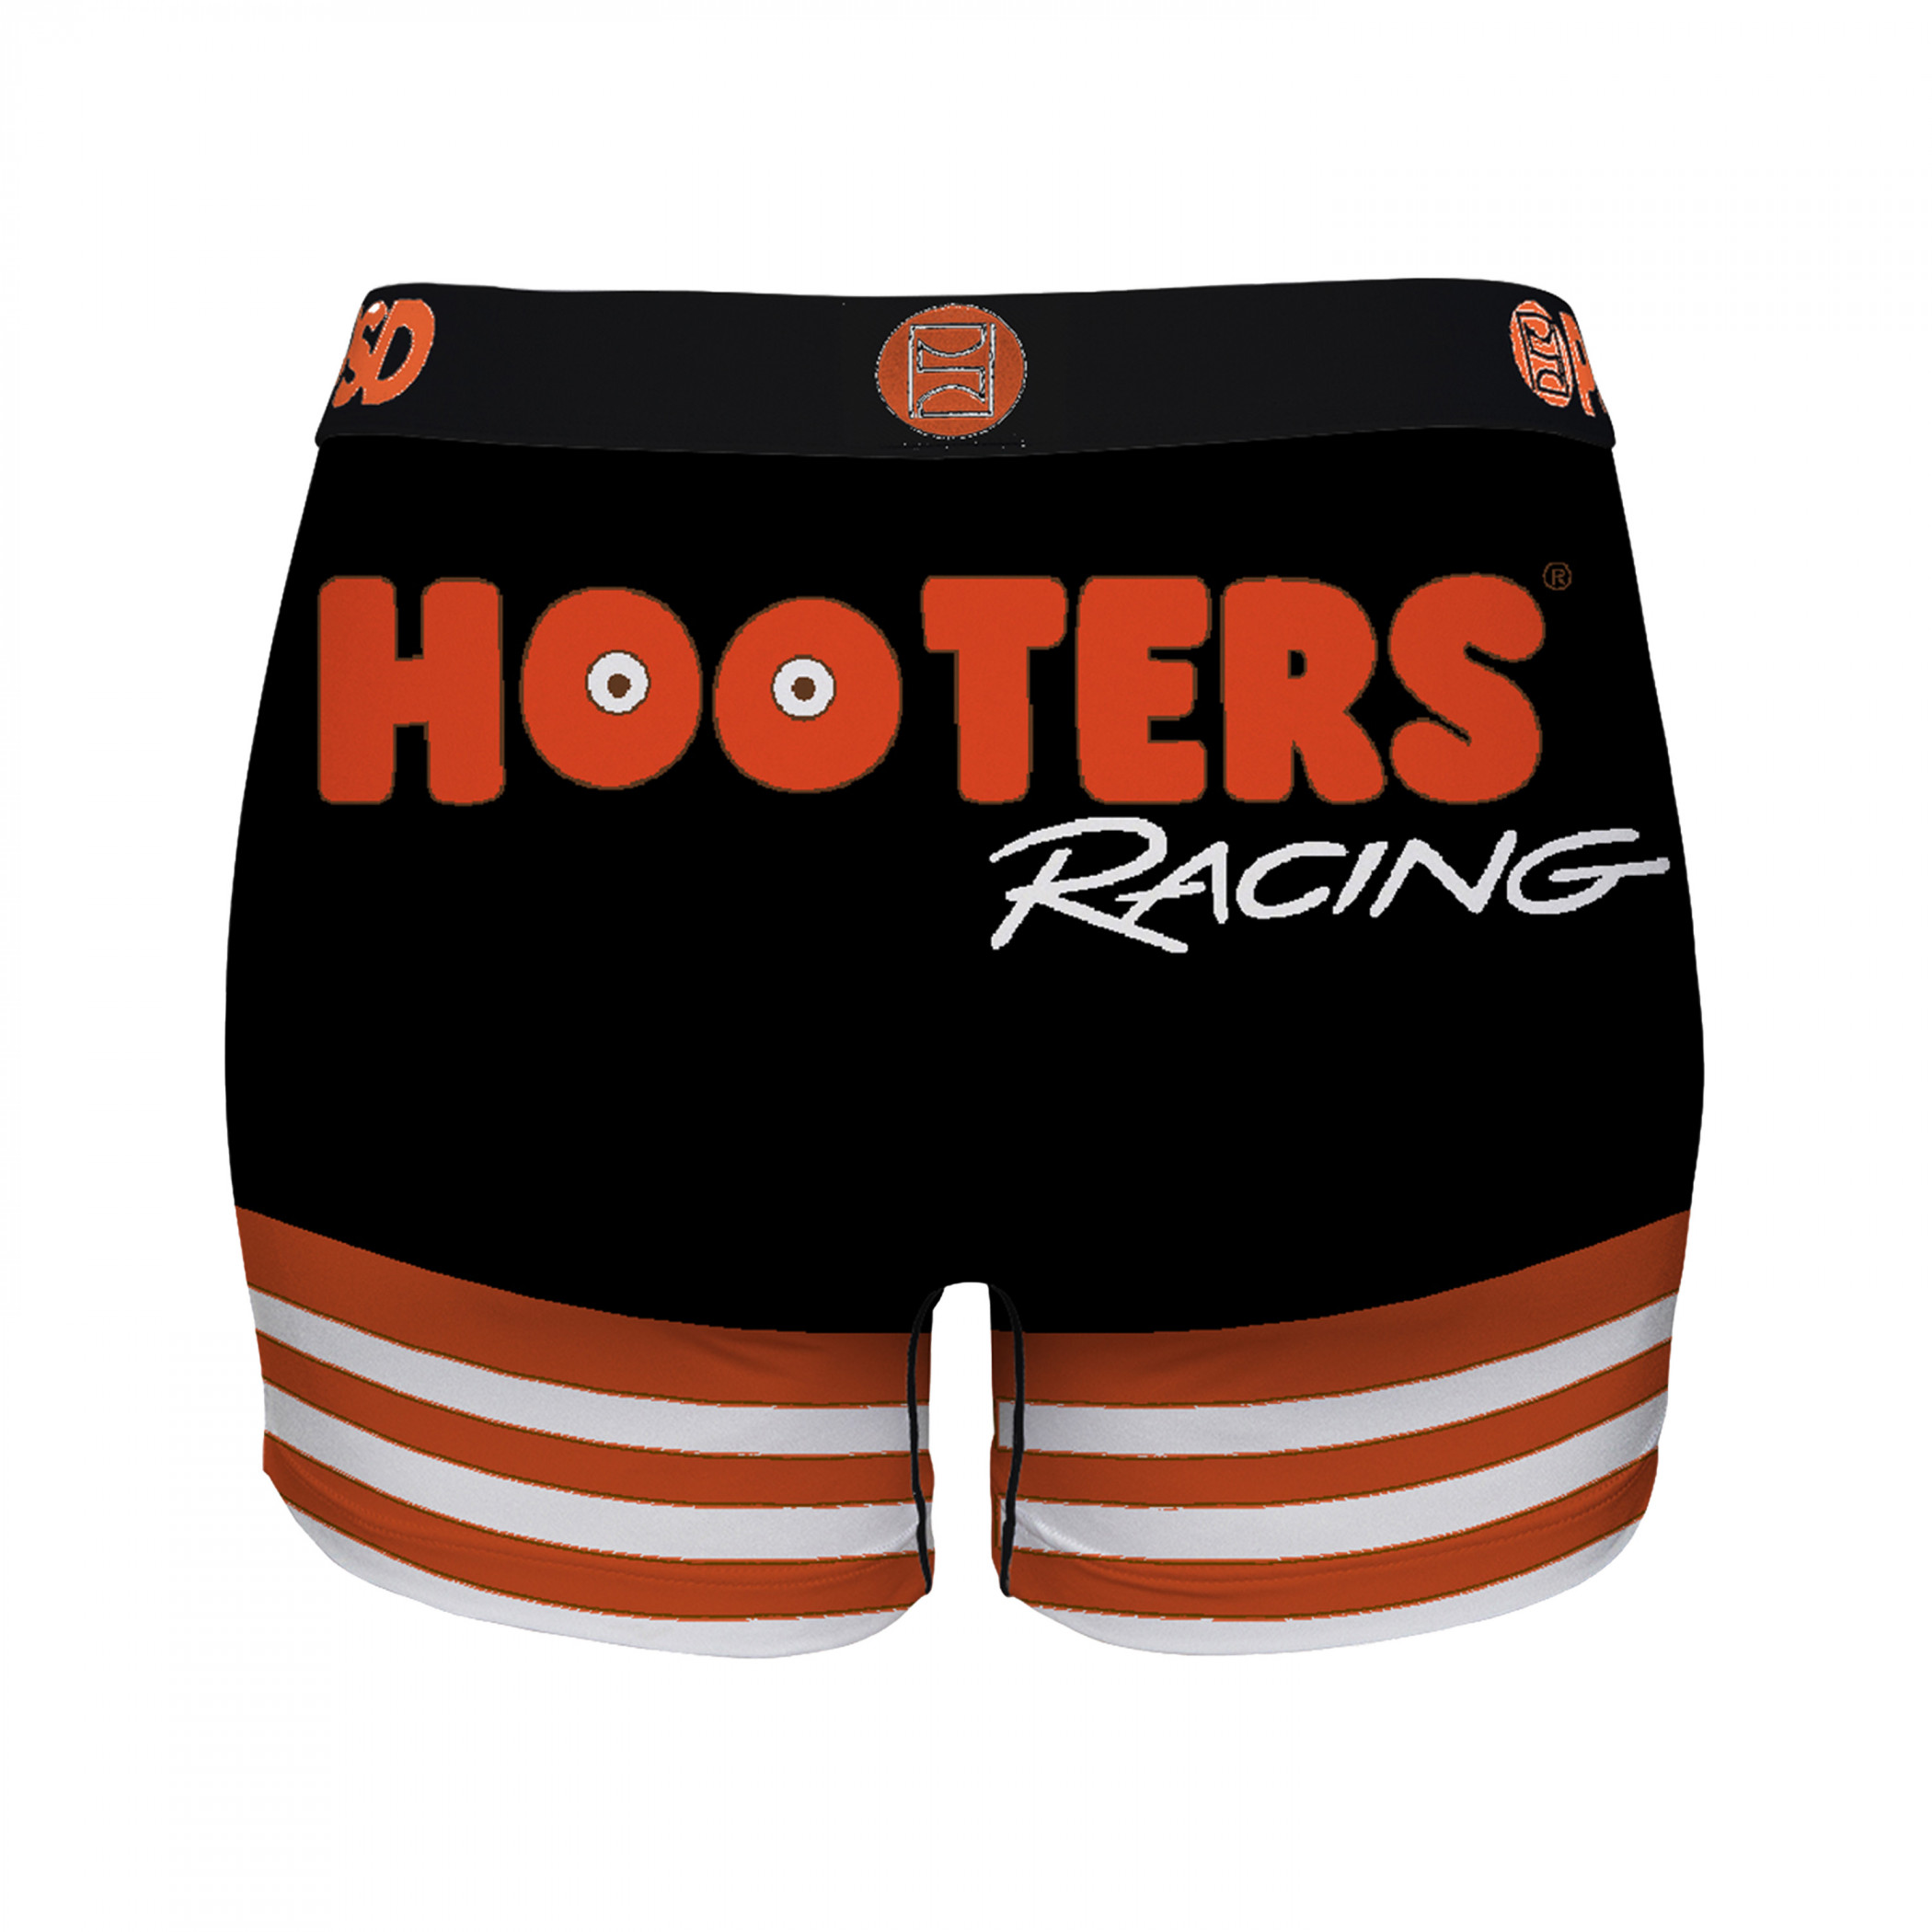 Hooters Retro Uniform PSD Long Boy Shorts Underwear